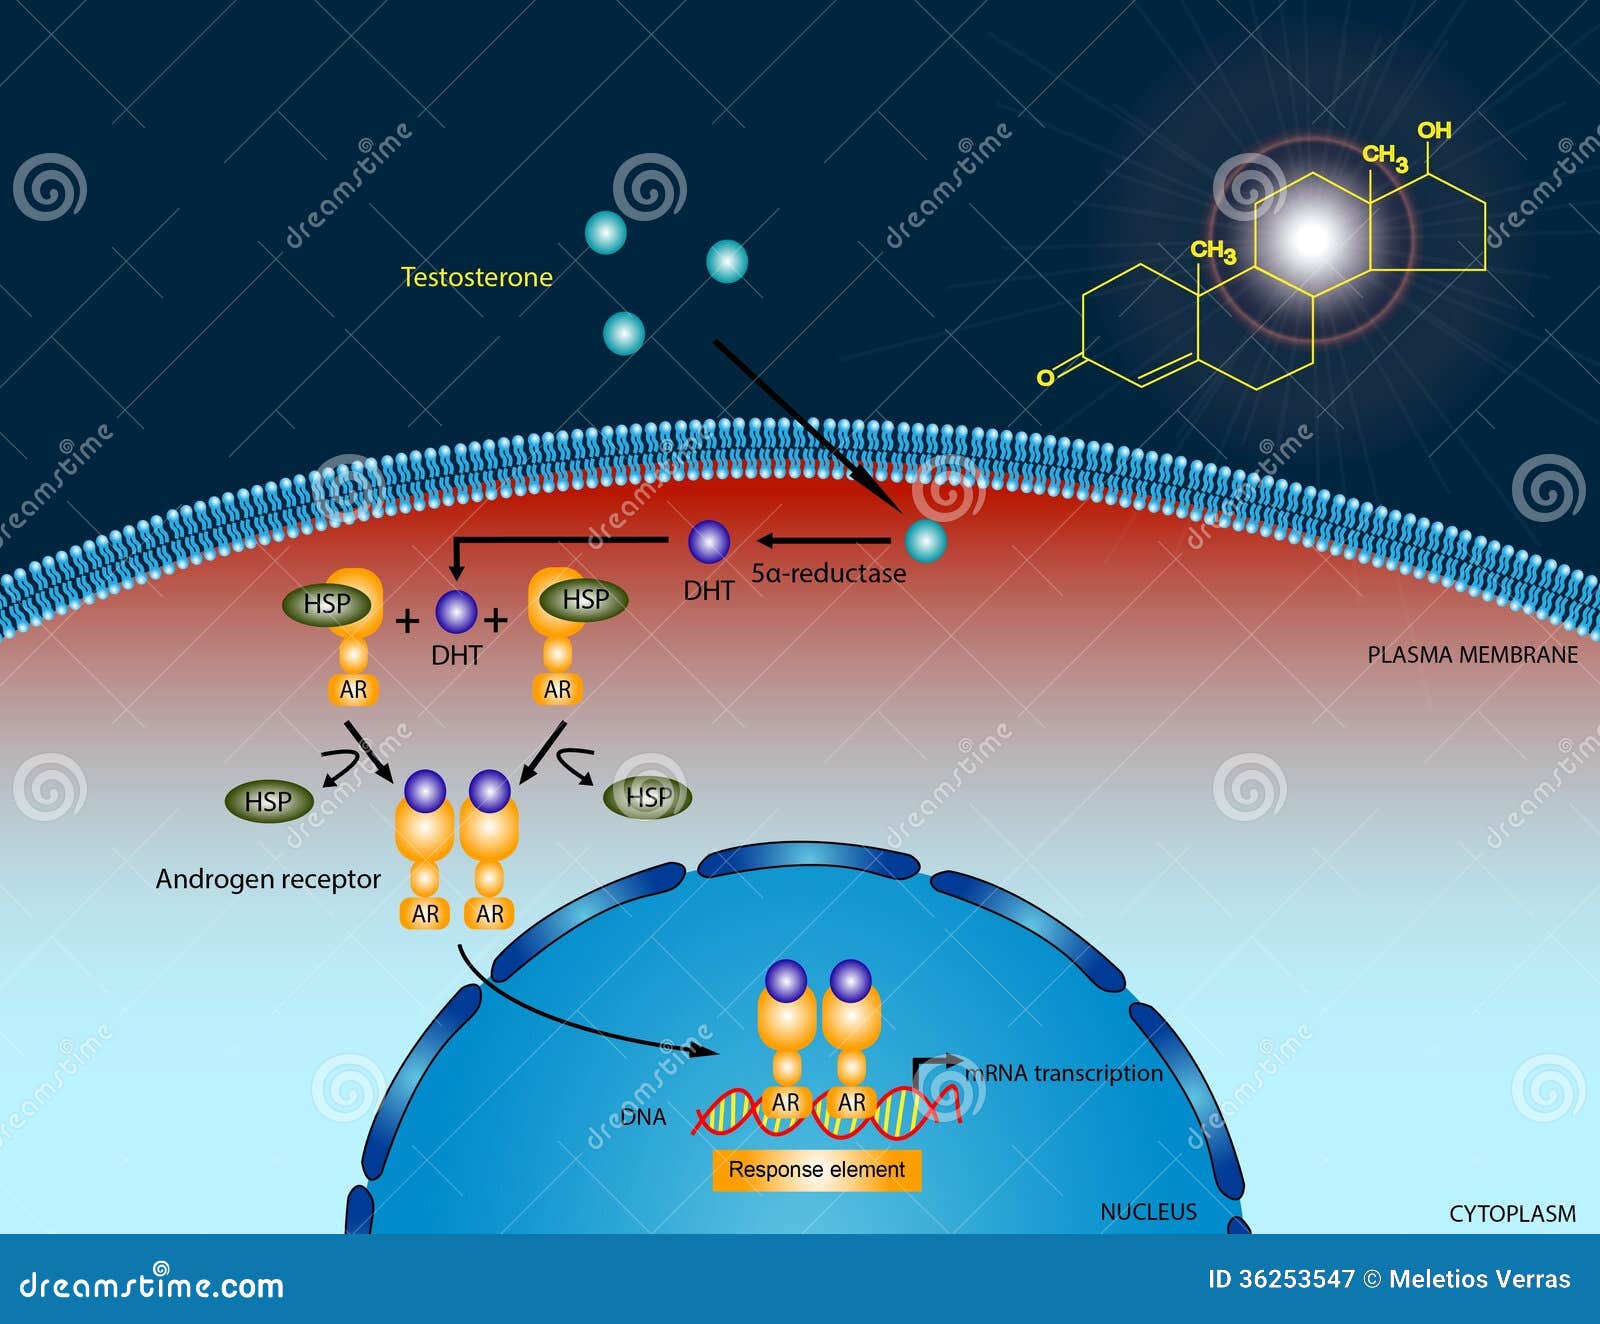 testosterone signaling pathway